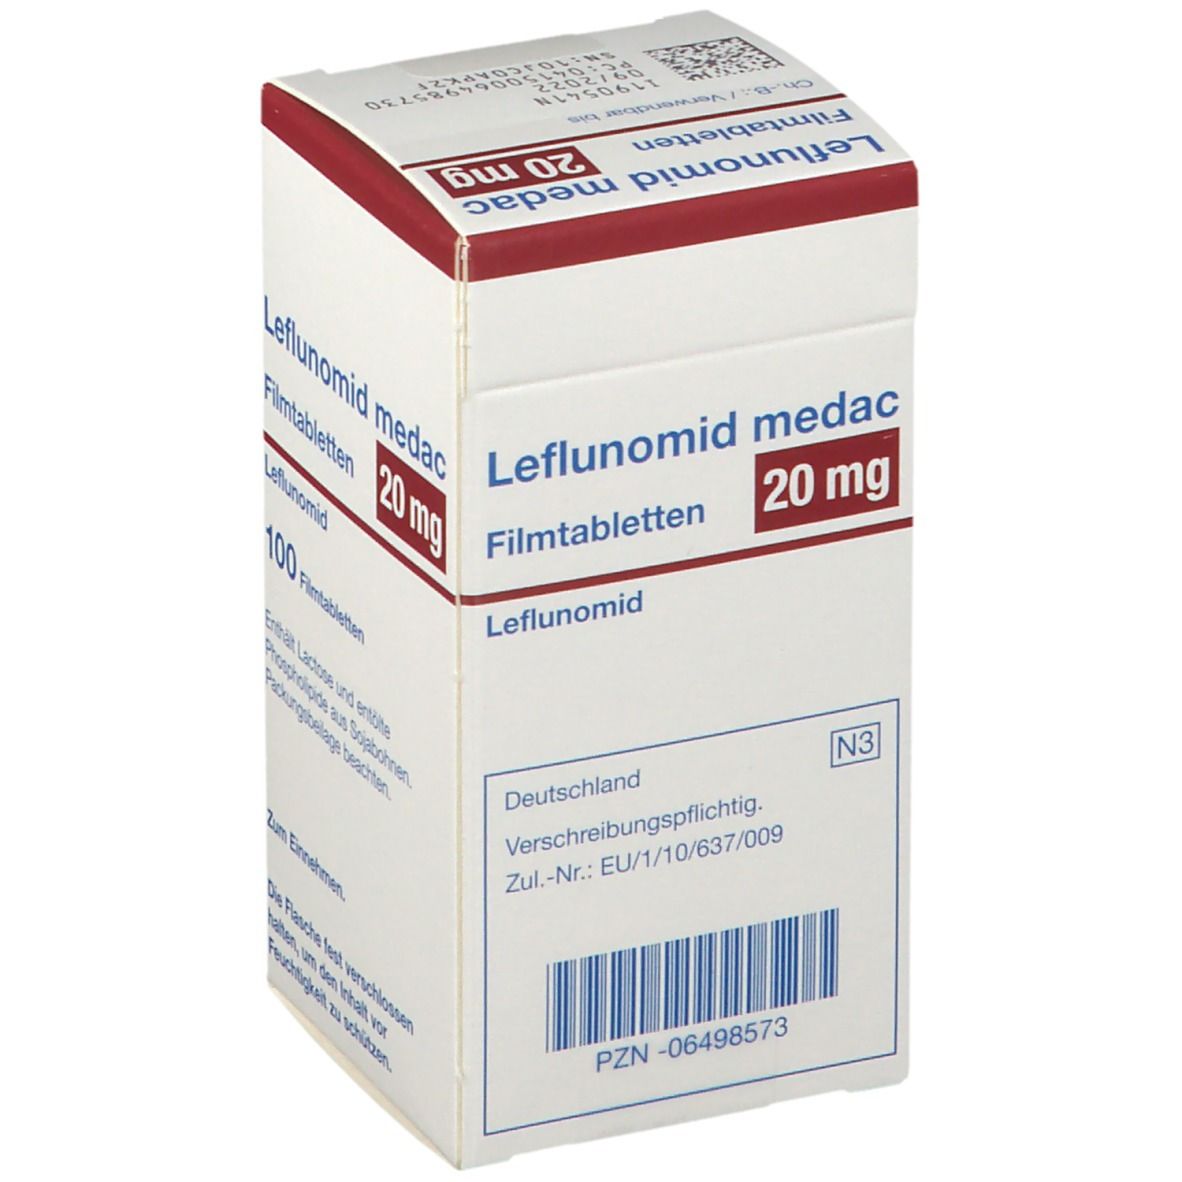 Leflunomid medac 20 mg